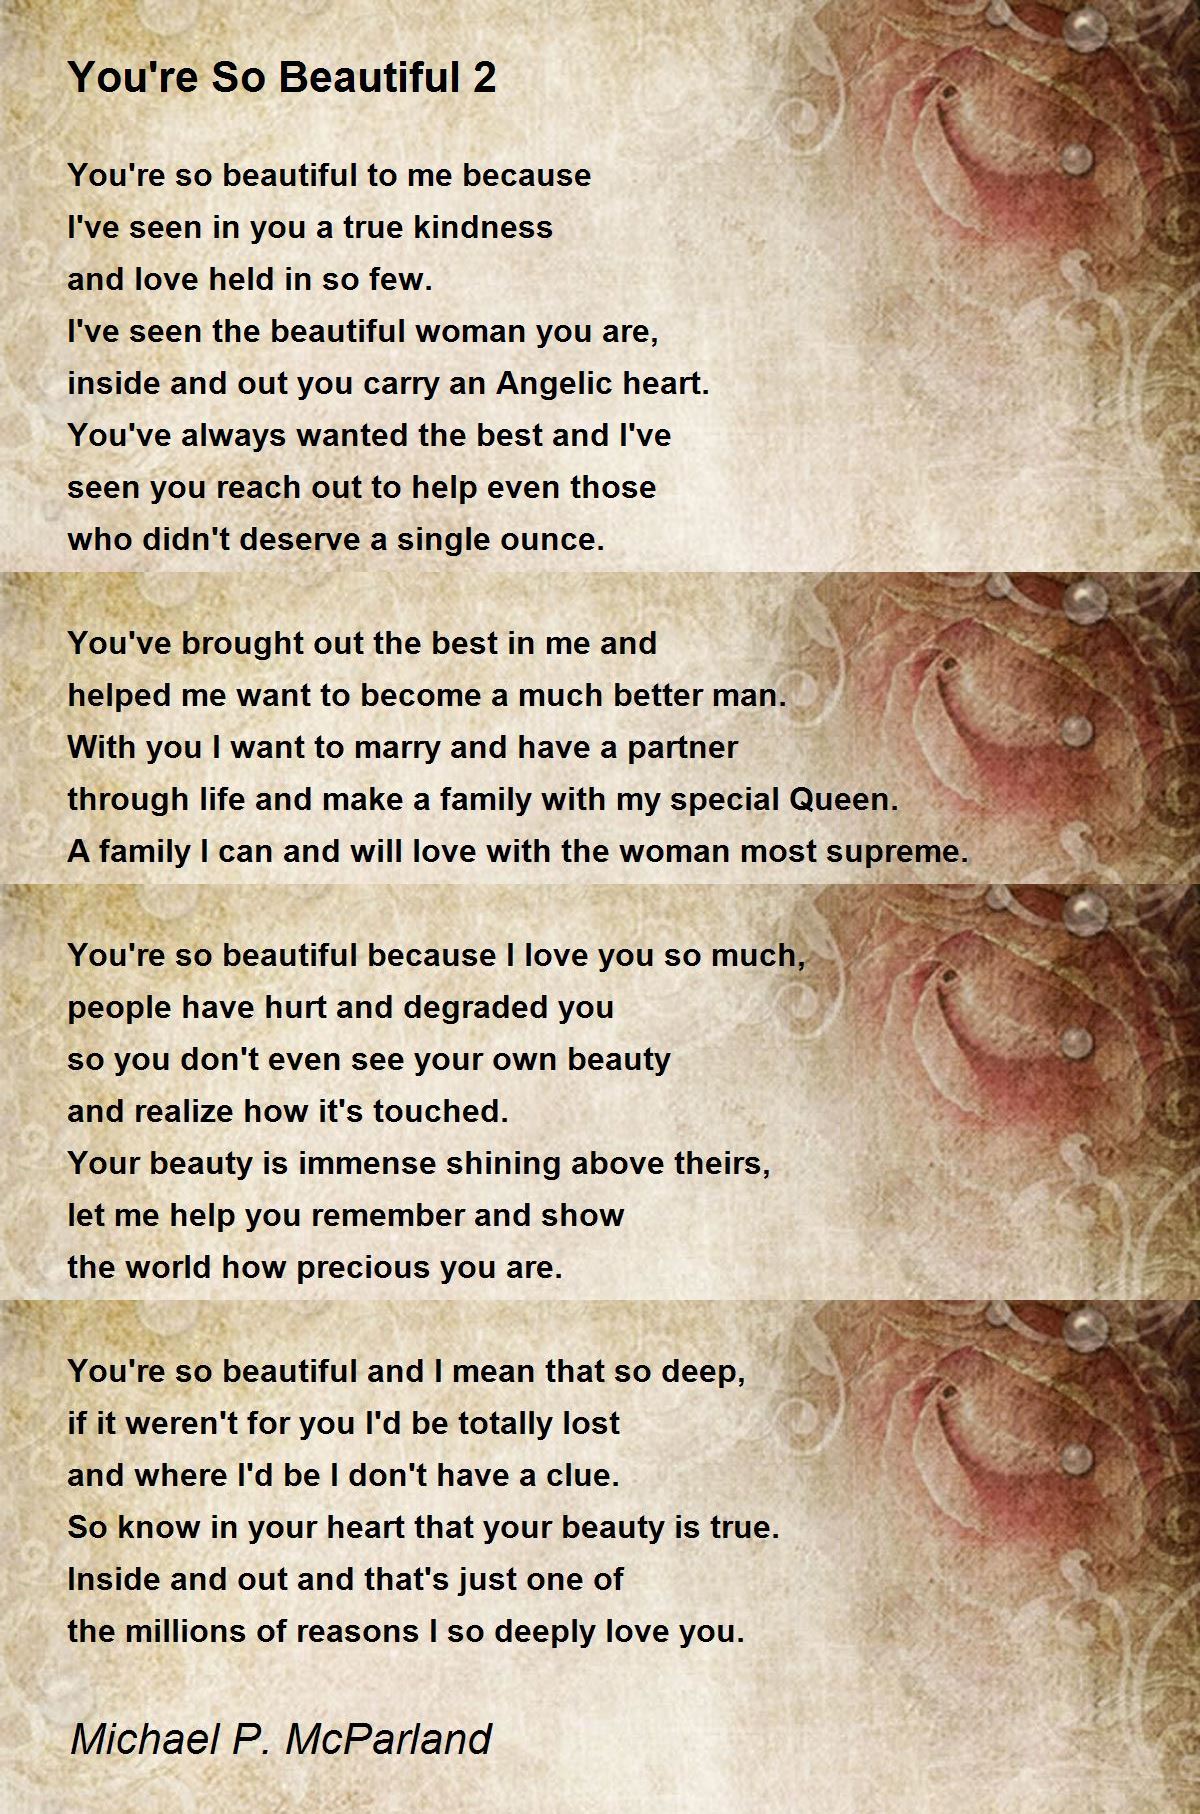 Your so amazing poems